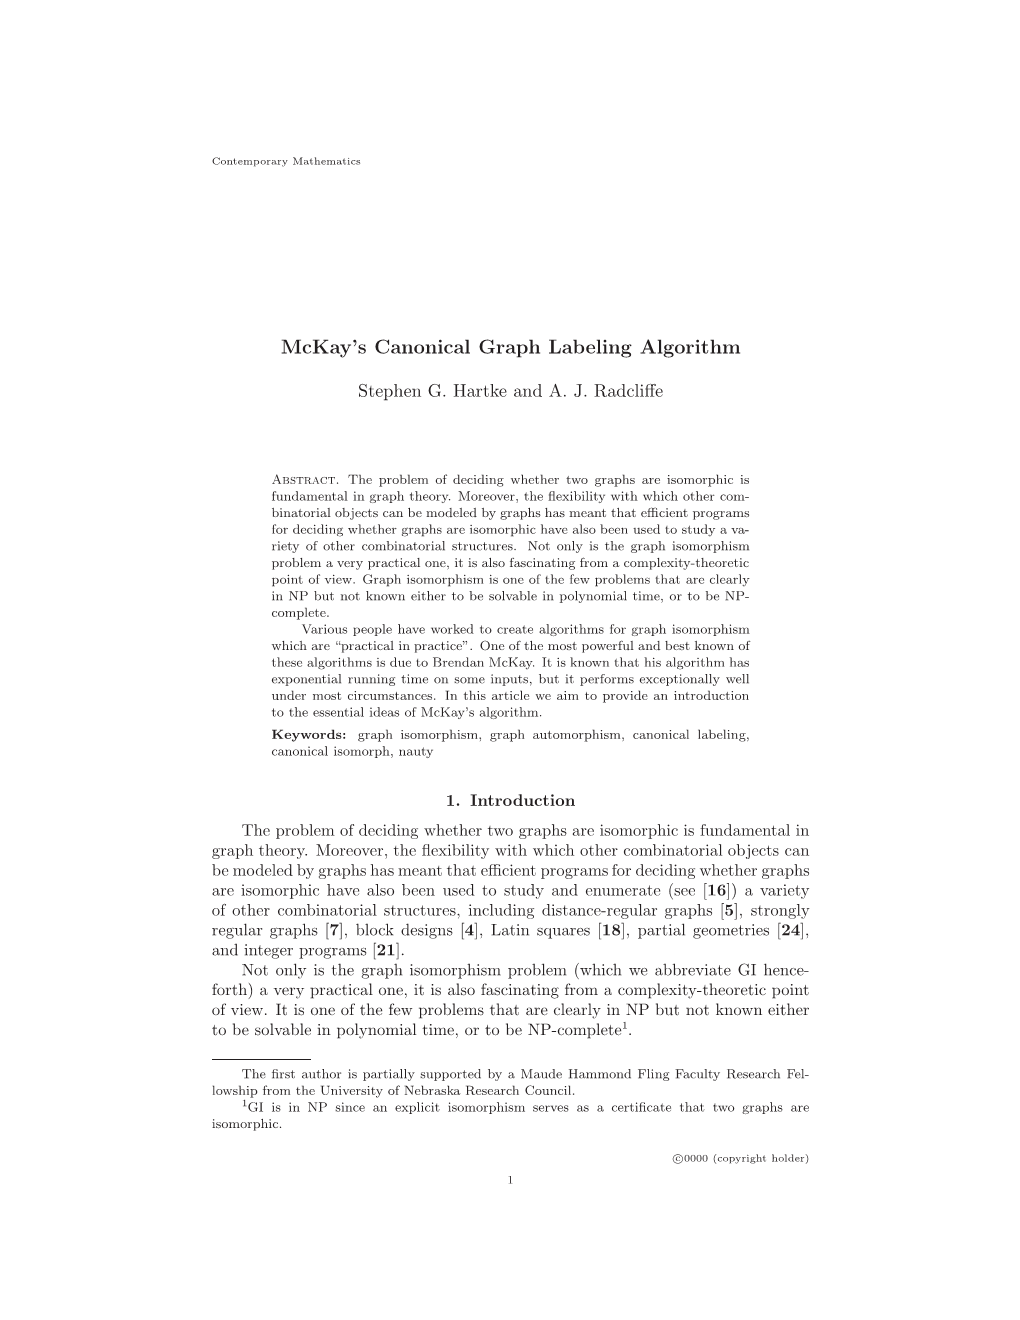 Mckay's Canonical Graph Labeling Algorithm